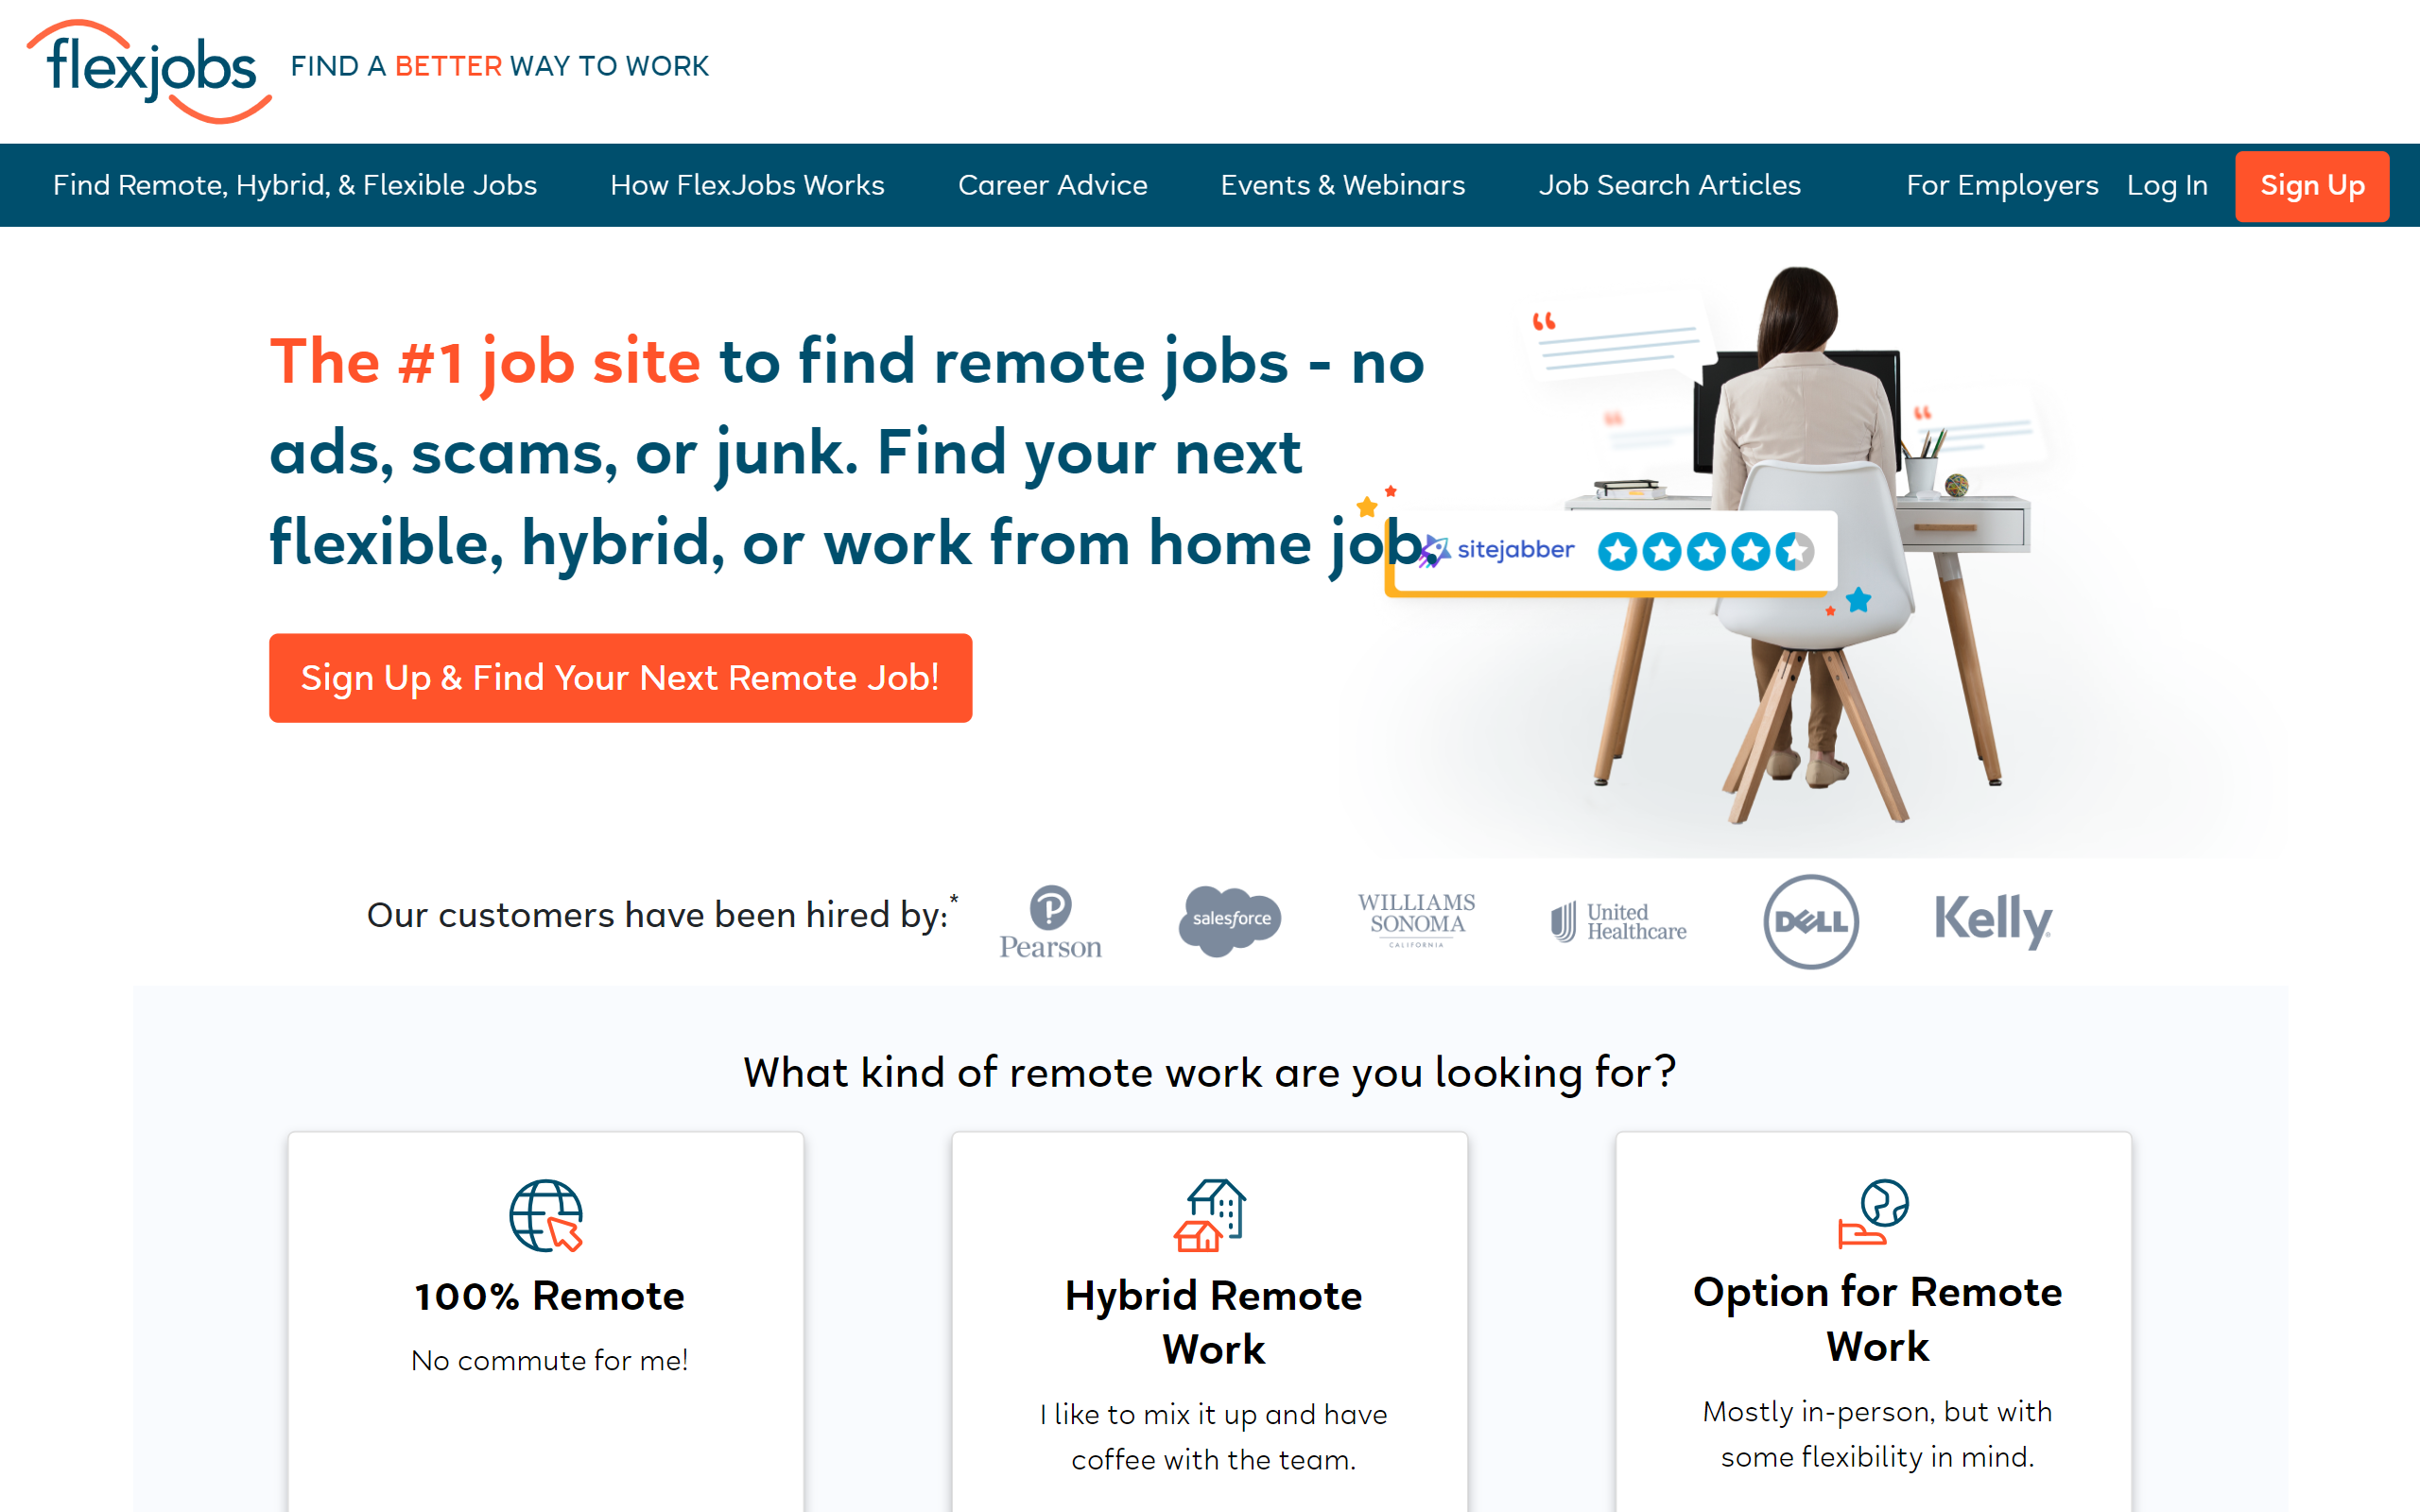 FlexJobs Job Search Site